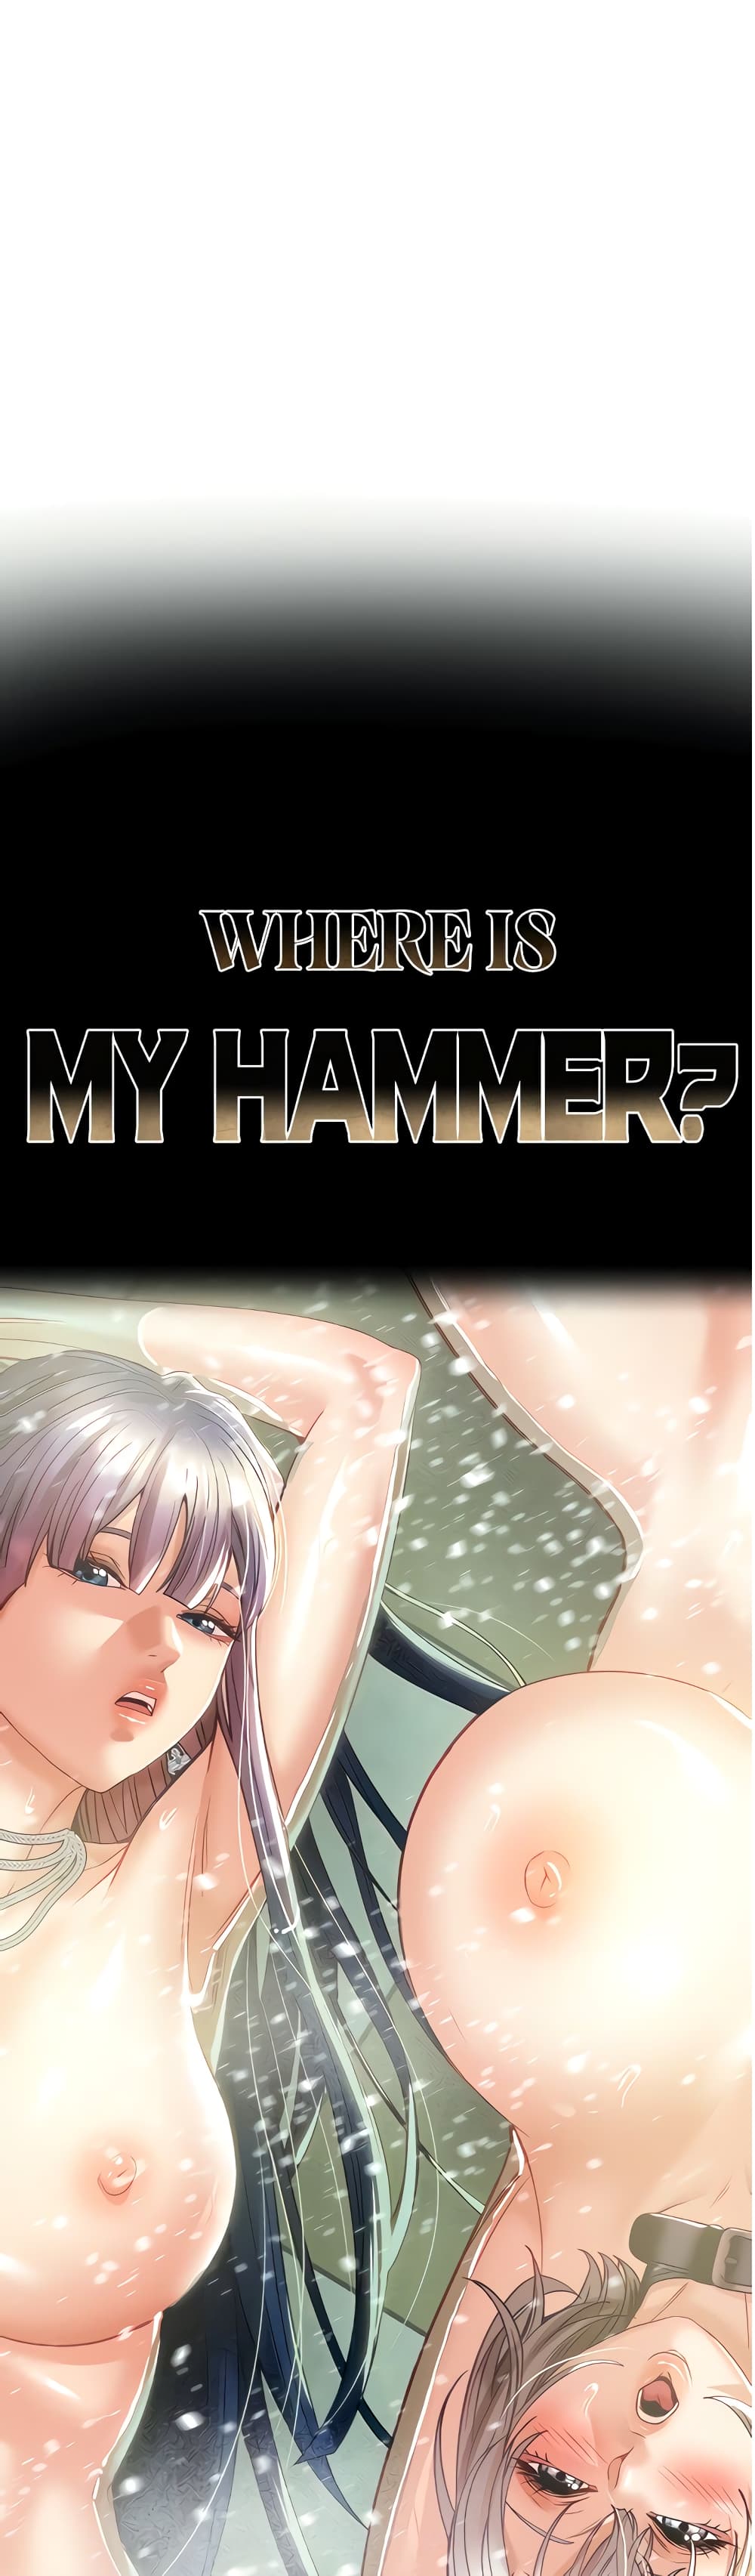 Where Did My Hammer Go? 36-36